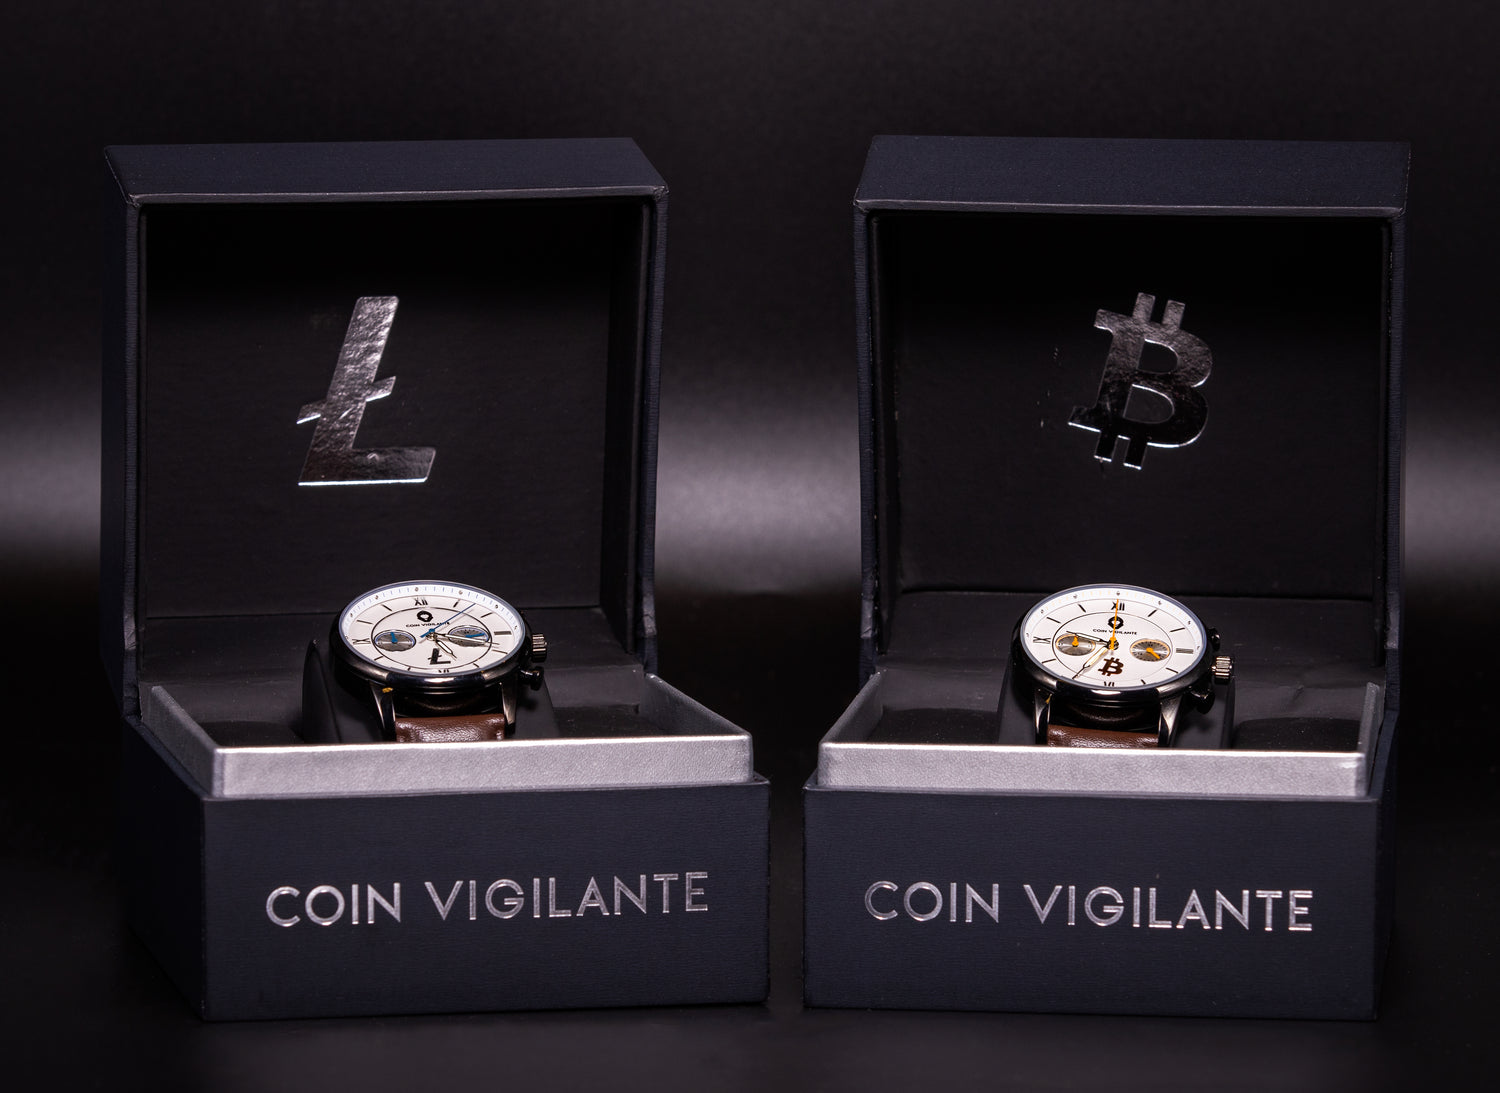 The Litecoin and Bitcoin Watches by Coin Vigilante